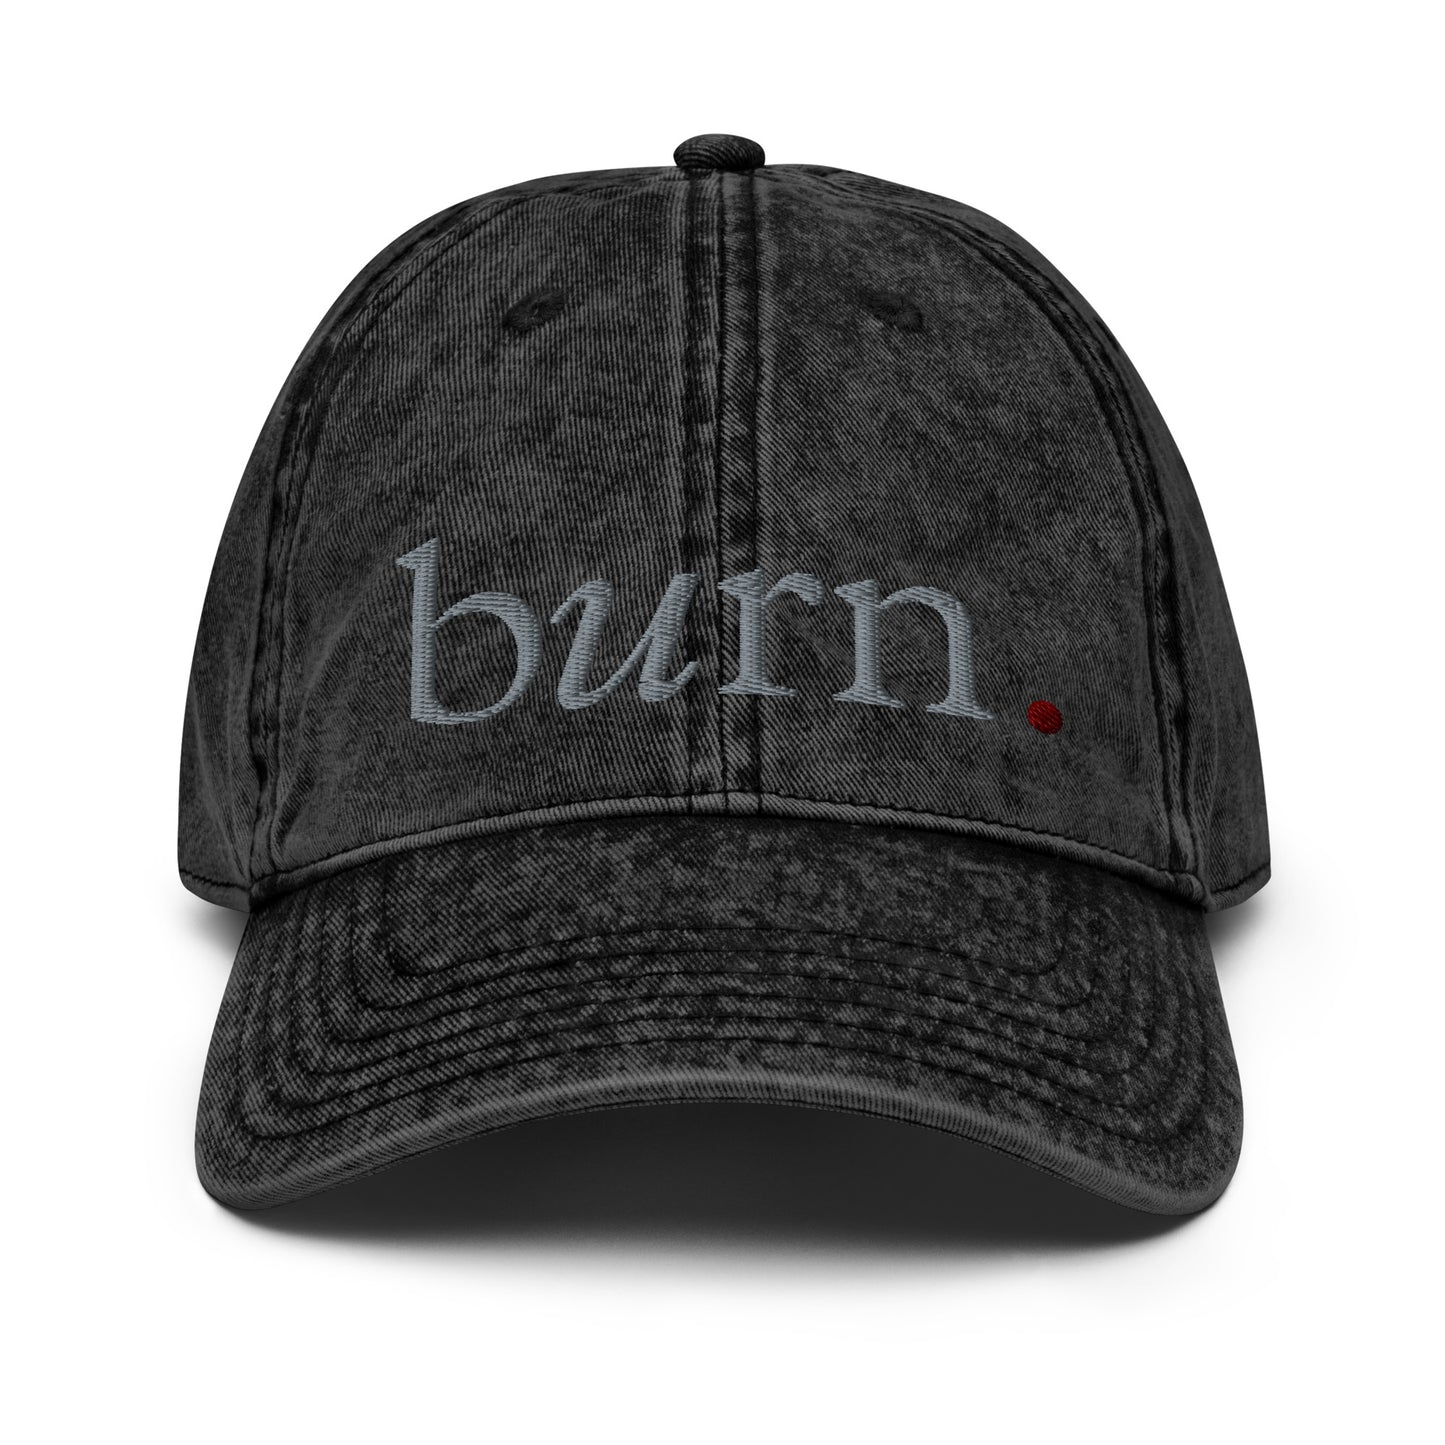 Burn Vintage Cotton Hat